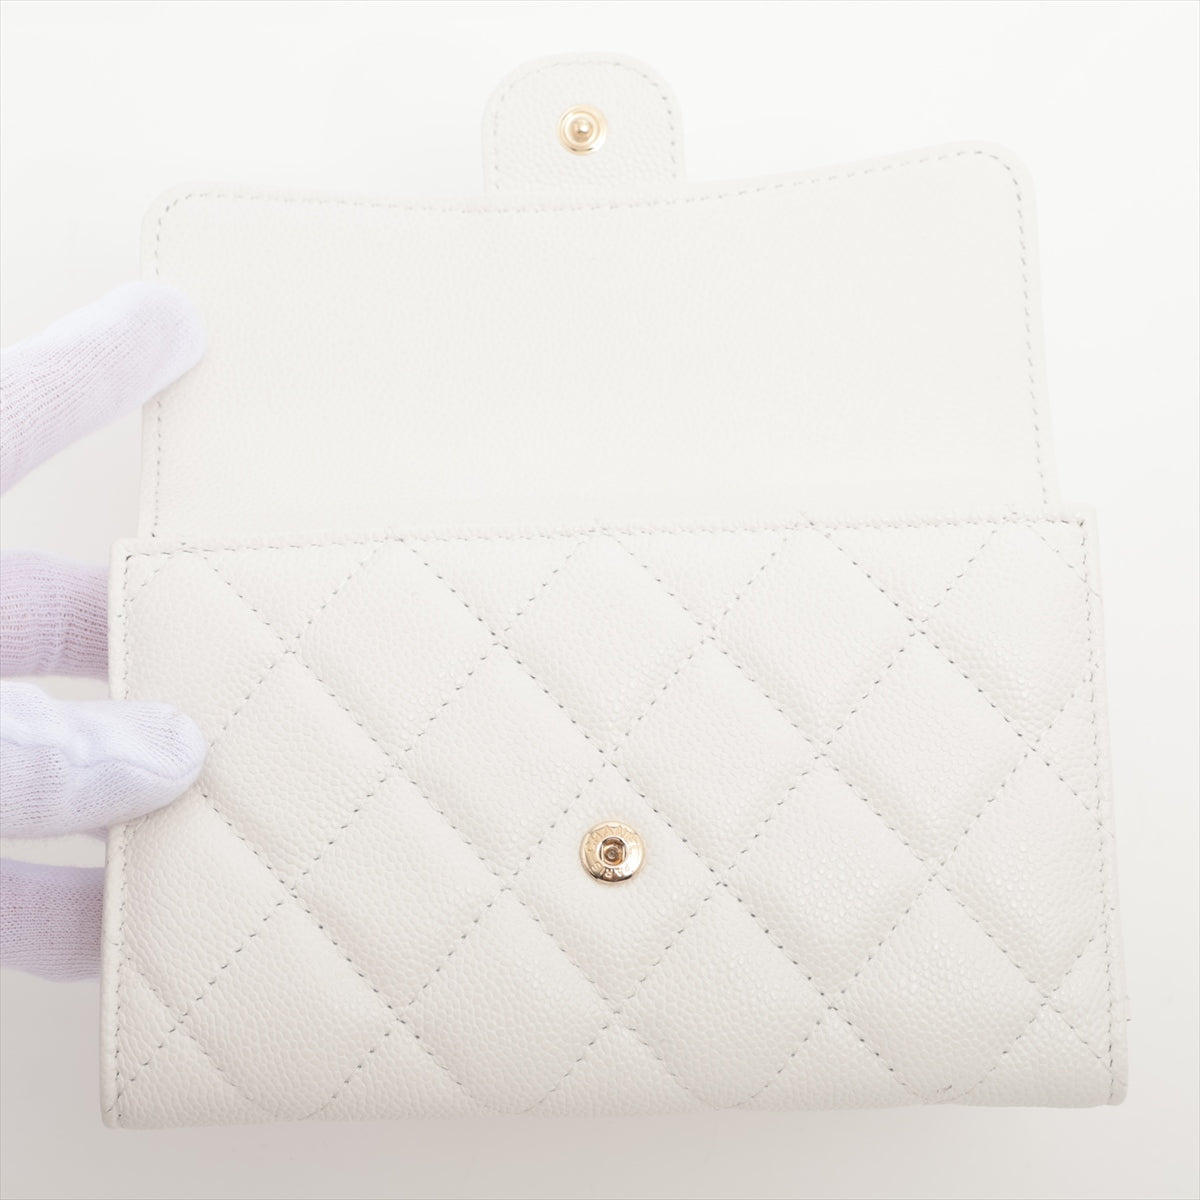 Chanel Matelasse Caviarskin Wallet White Gold Metal fittings random